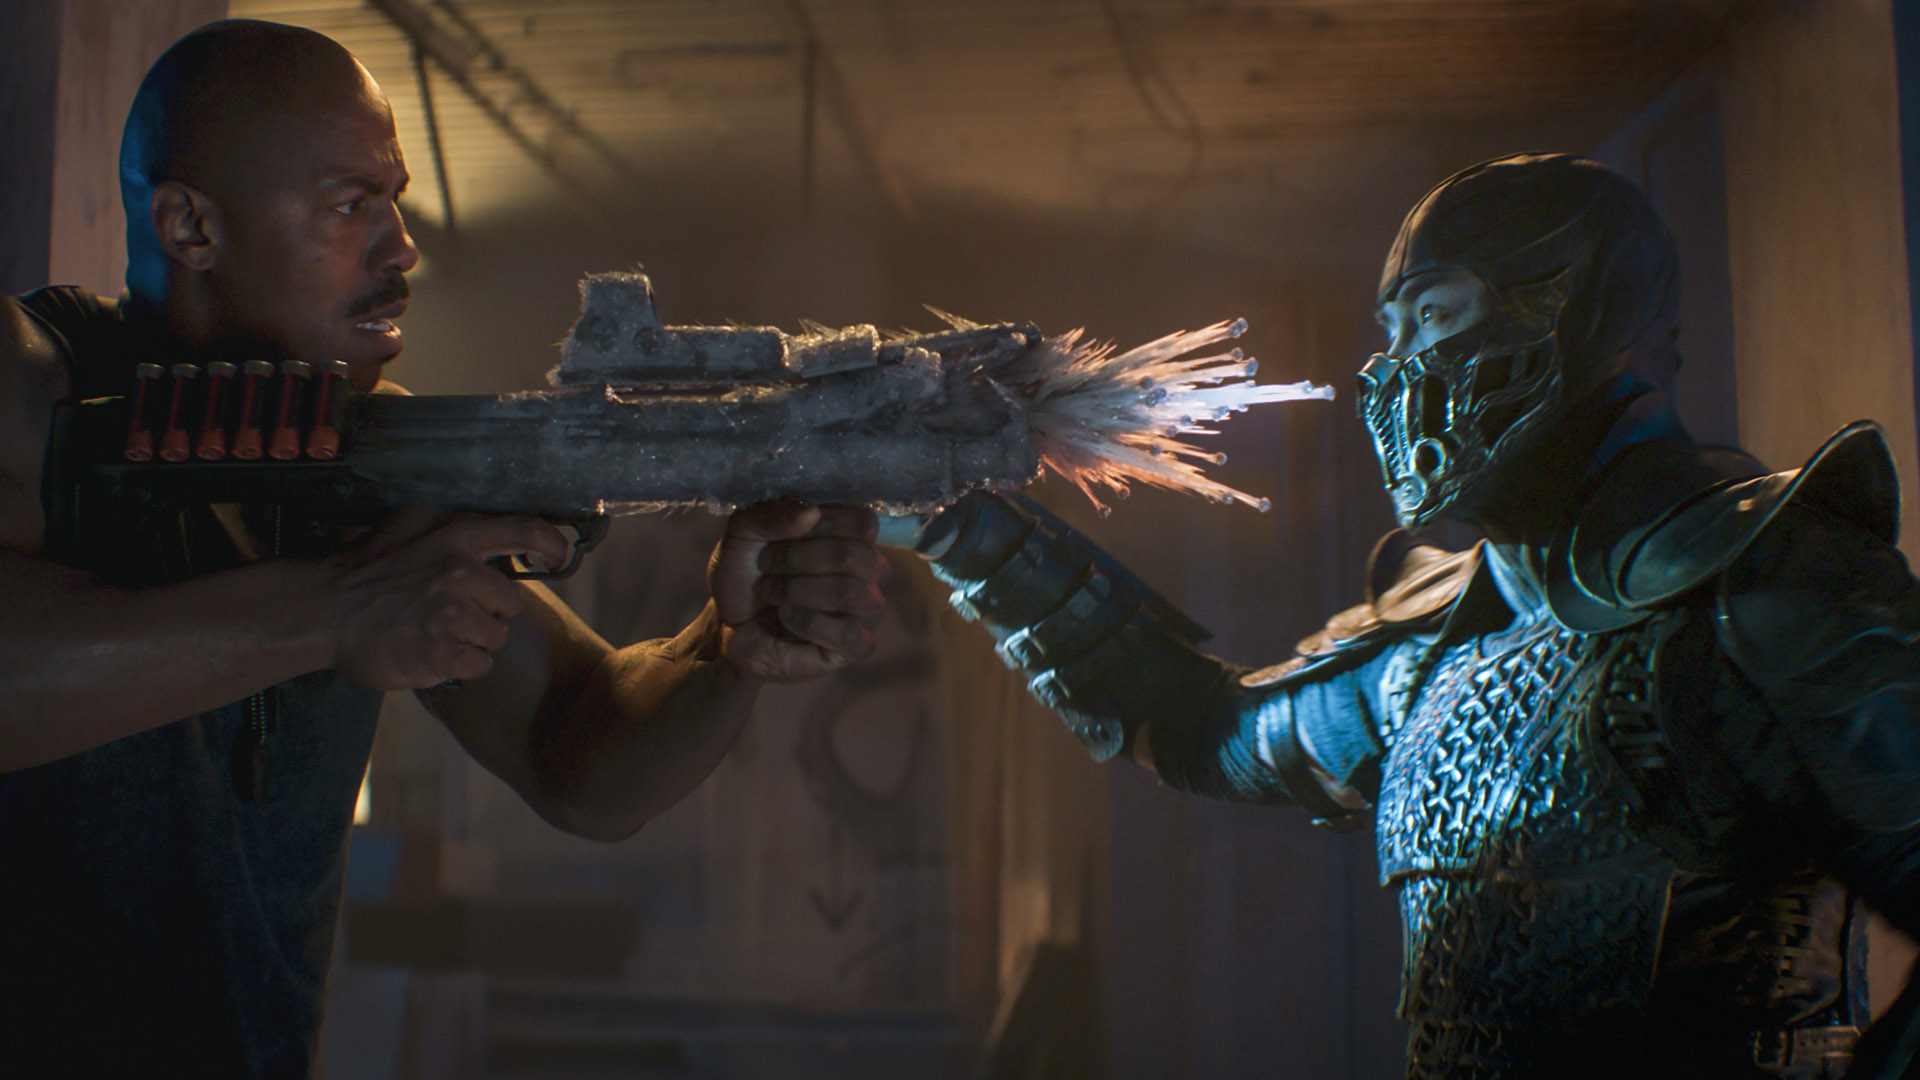 Sub-Zero freezes Jax's gun in 2021's Mortal Kombat movie